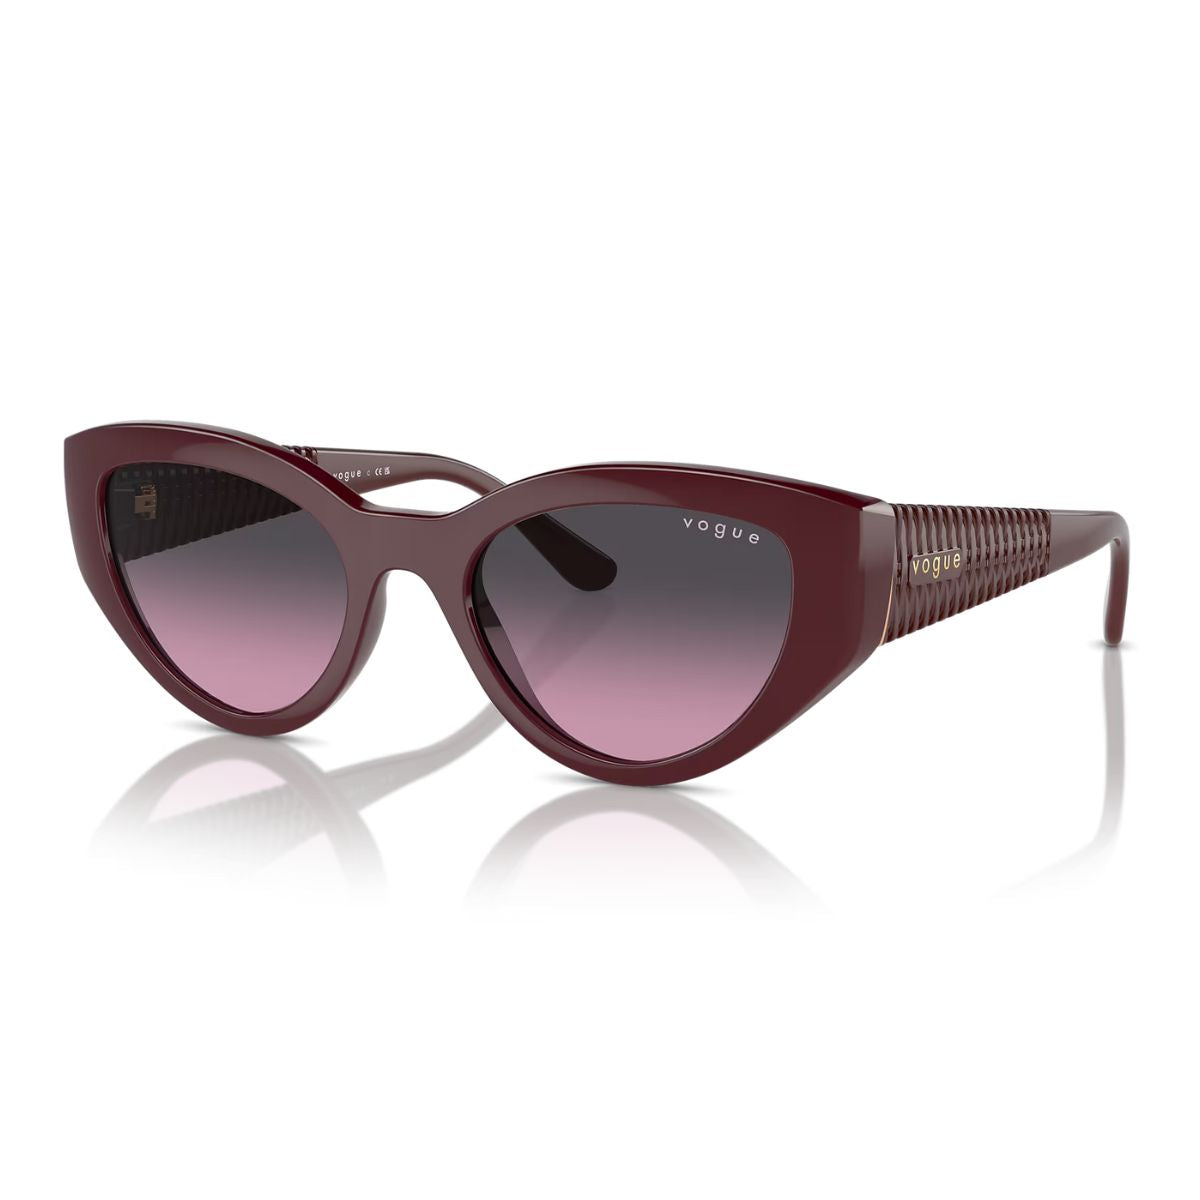 "Buy Vogue Trending UV Protection Cat Eye Sunglasses For Women's At Optorium"